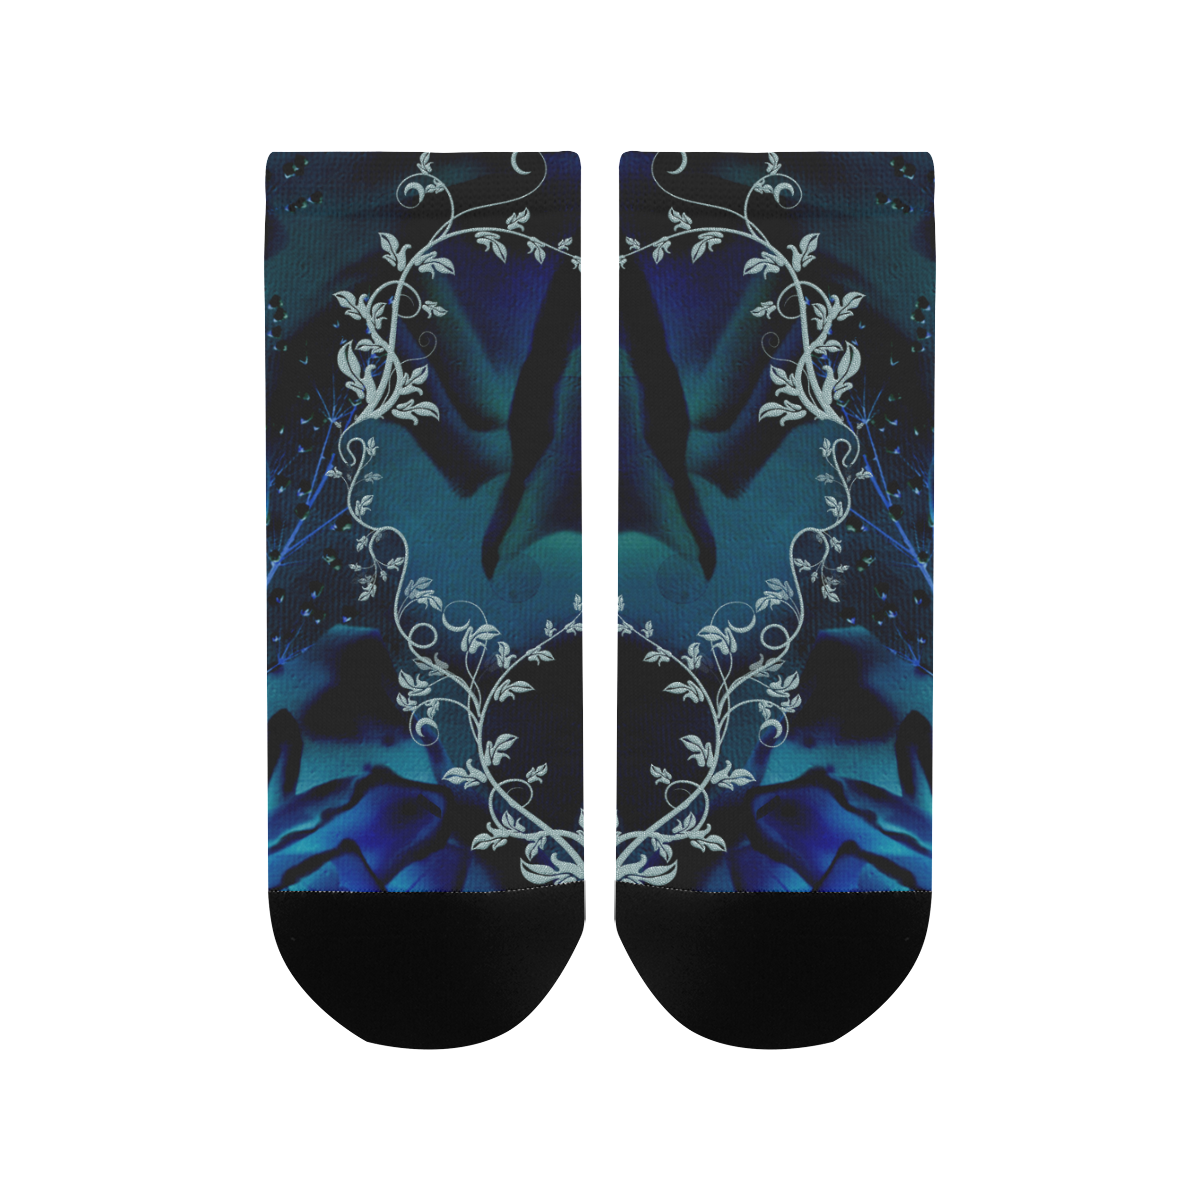 Floral design, blue colors Women's Ankle Socks